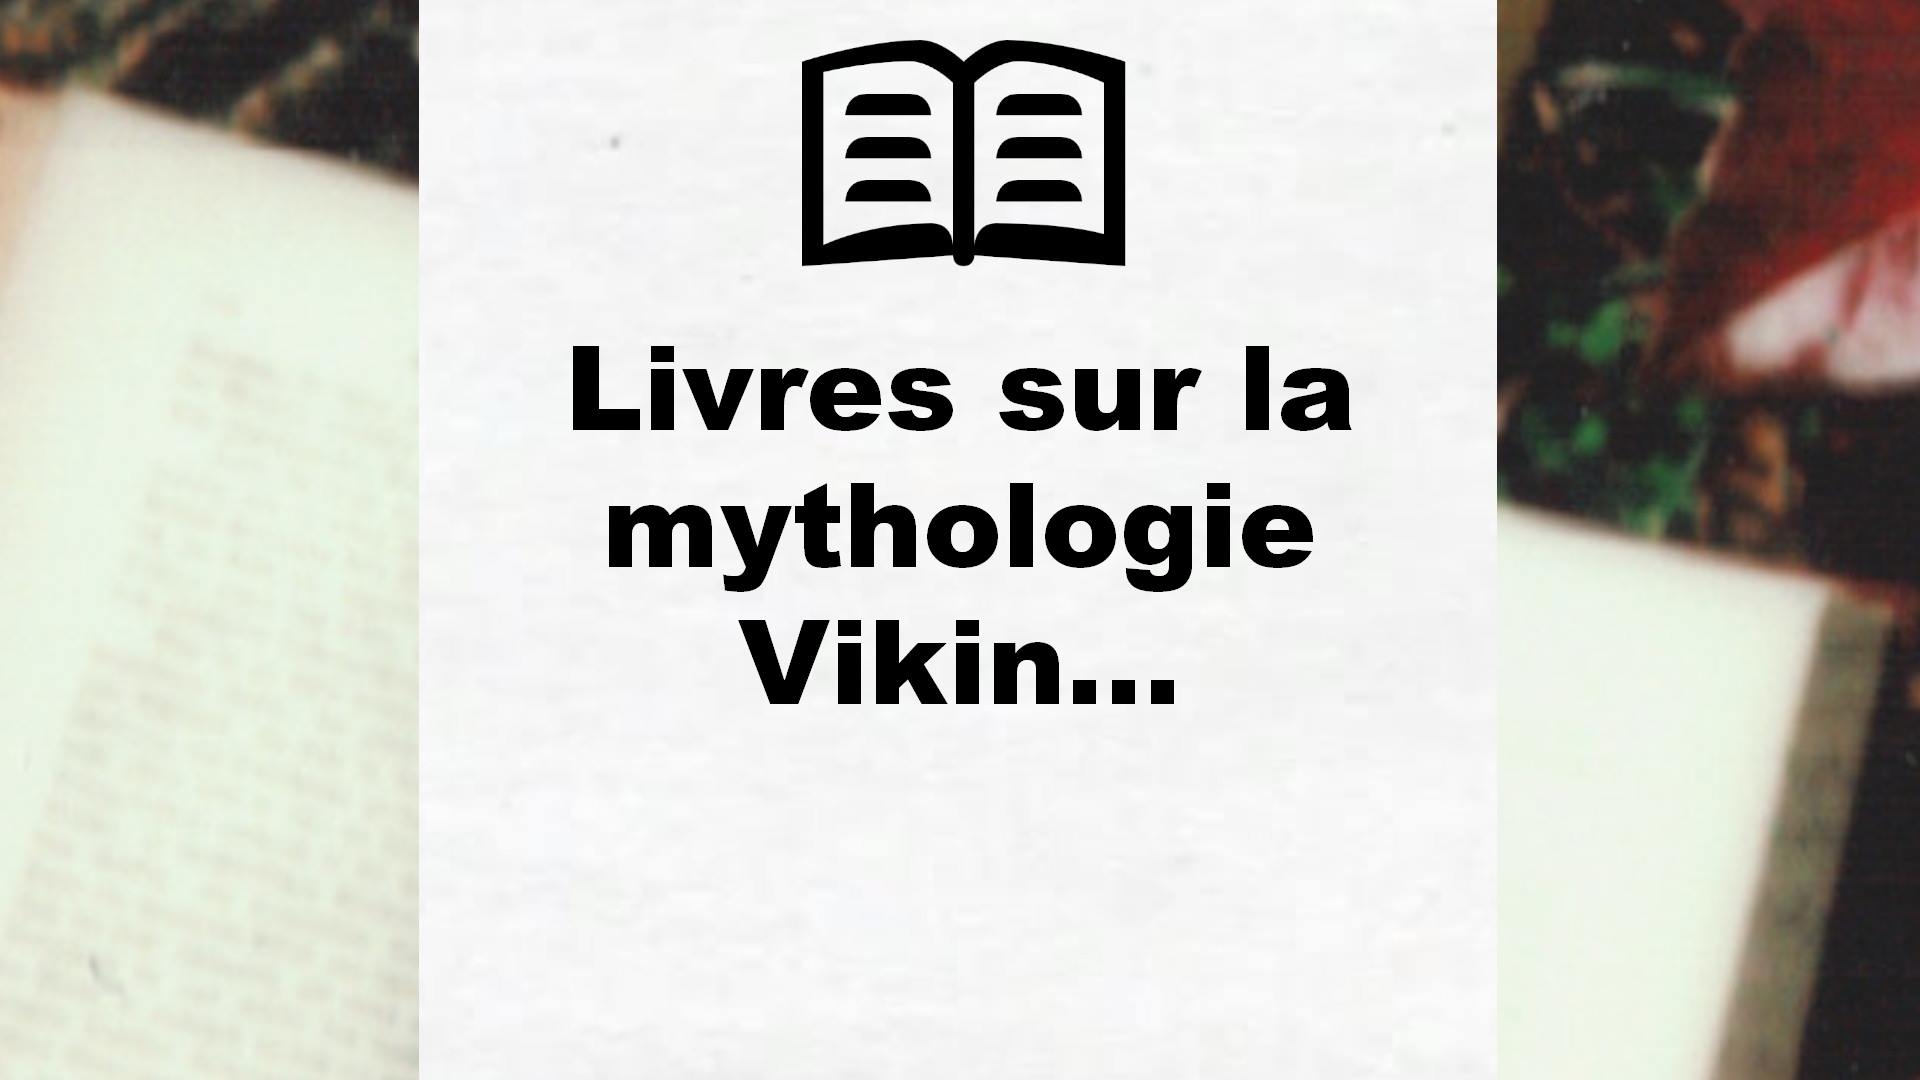 Livres sur la mythologie Viking